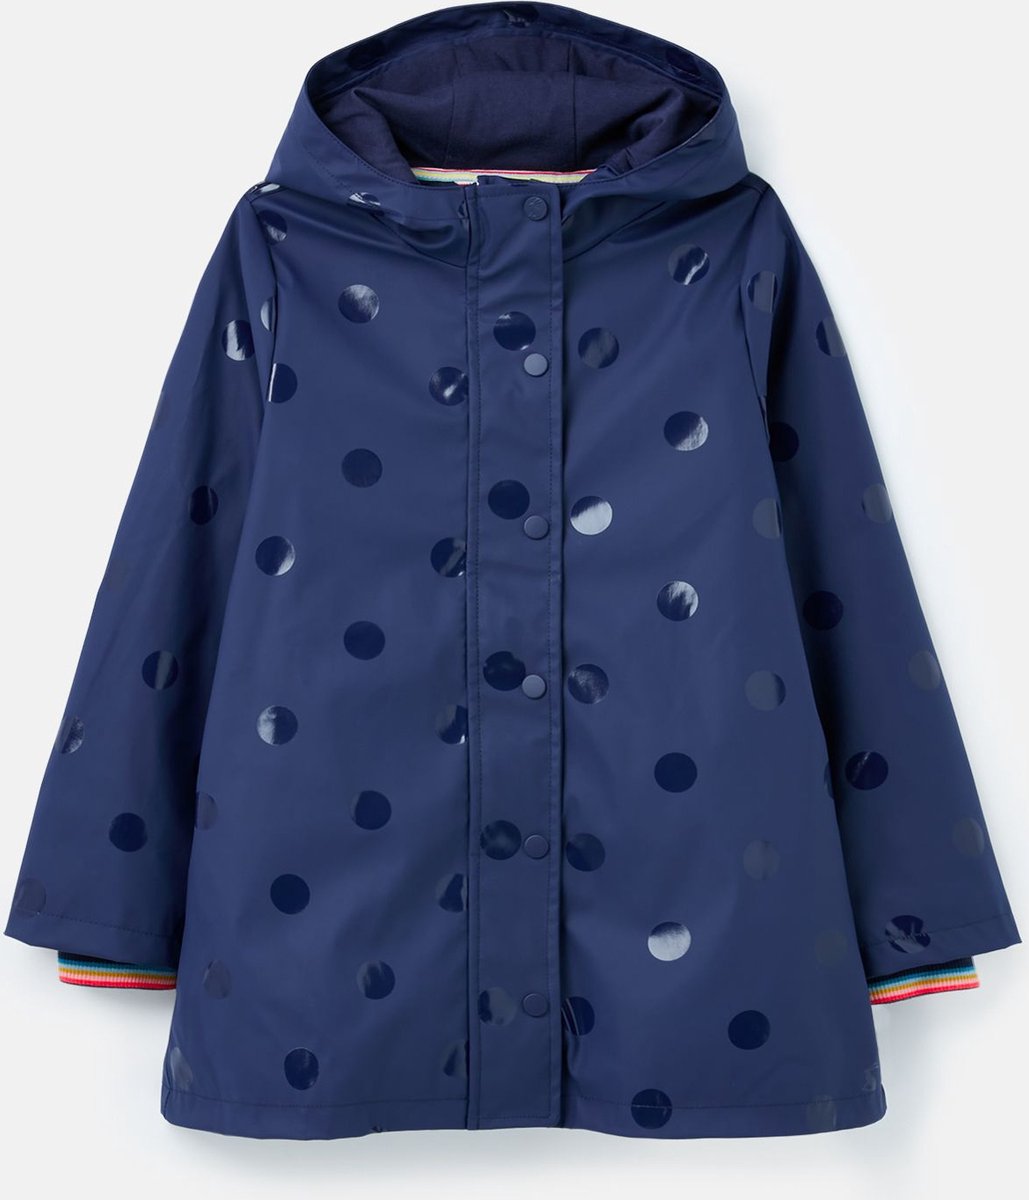 Splashley Novelty Showerproof Raincoat 2YEARS